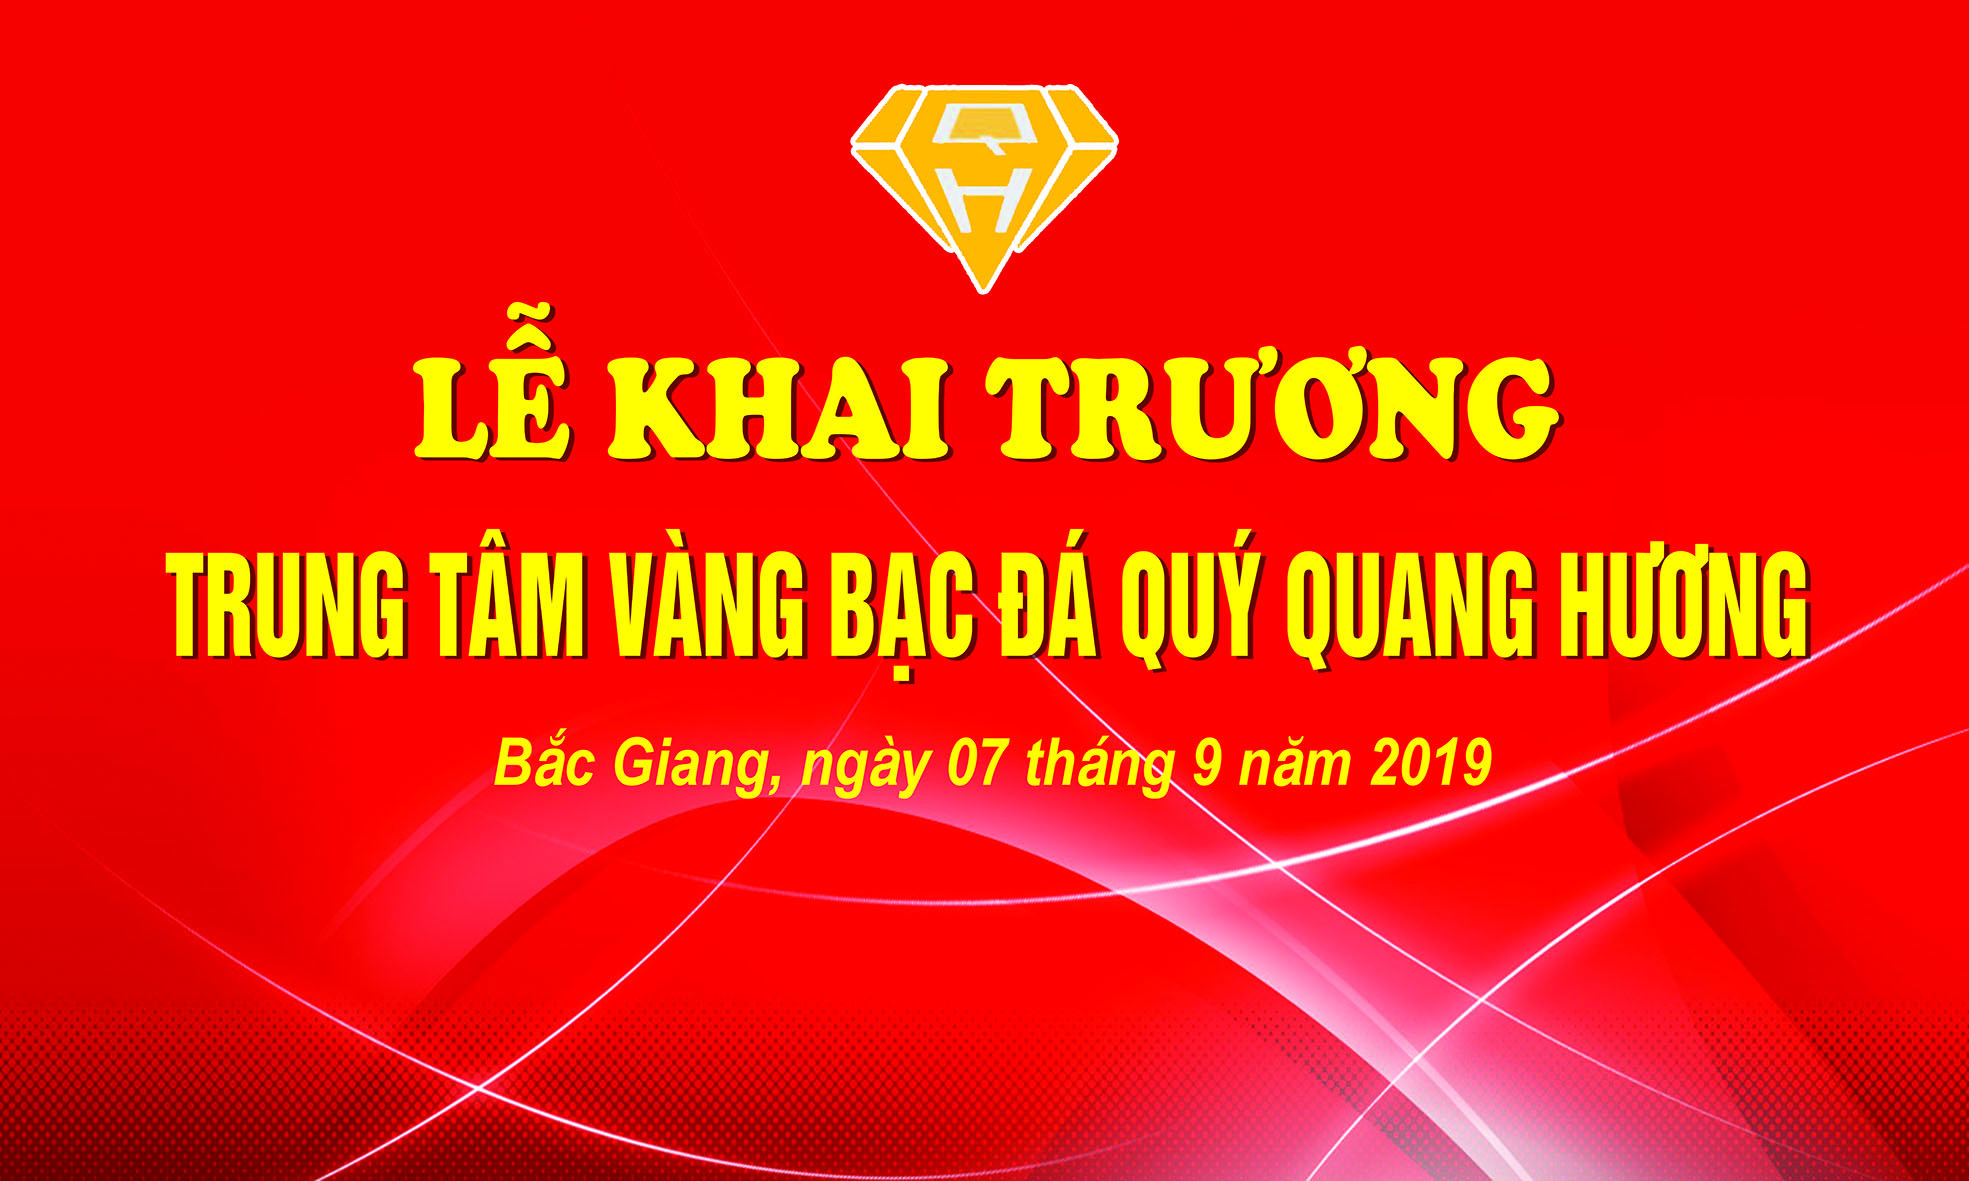 Le khai truong Trung tam vang bac da quy Quang Huong